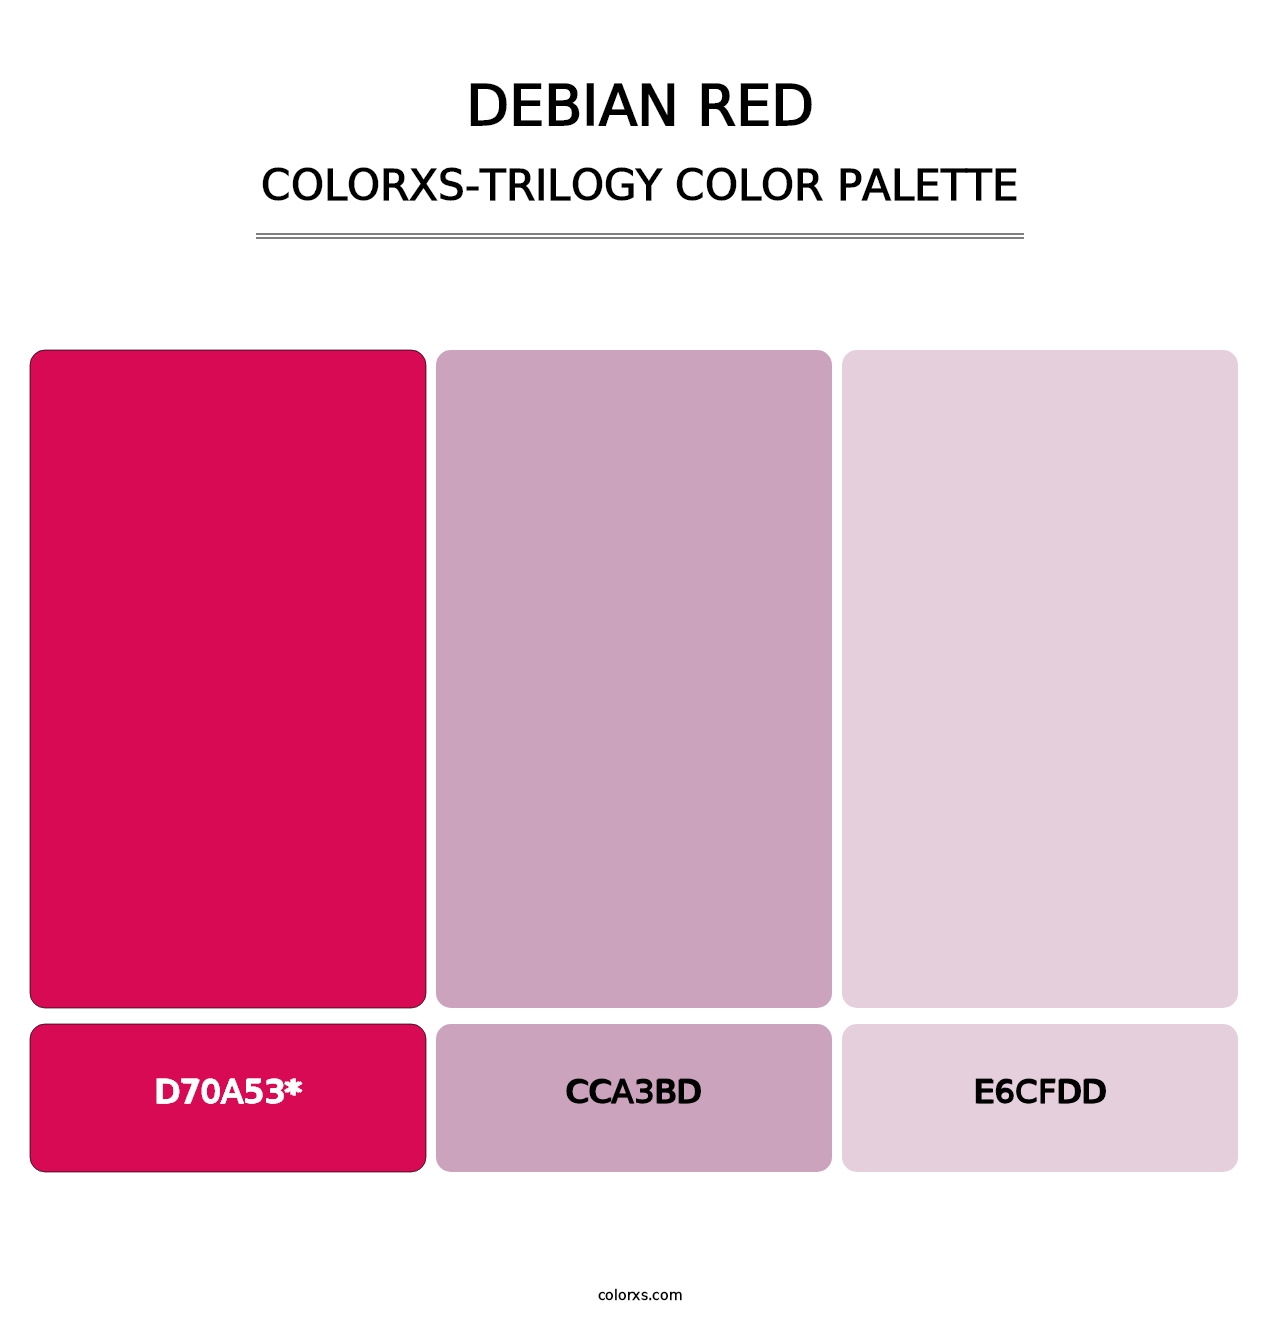 Debian red - Colorxs Trilogy Palette